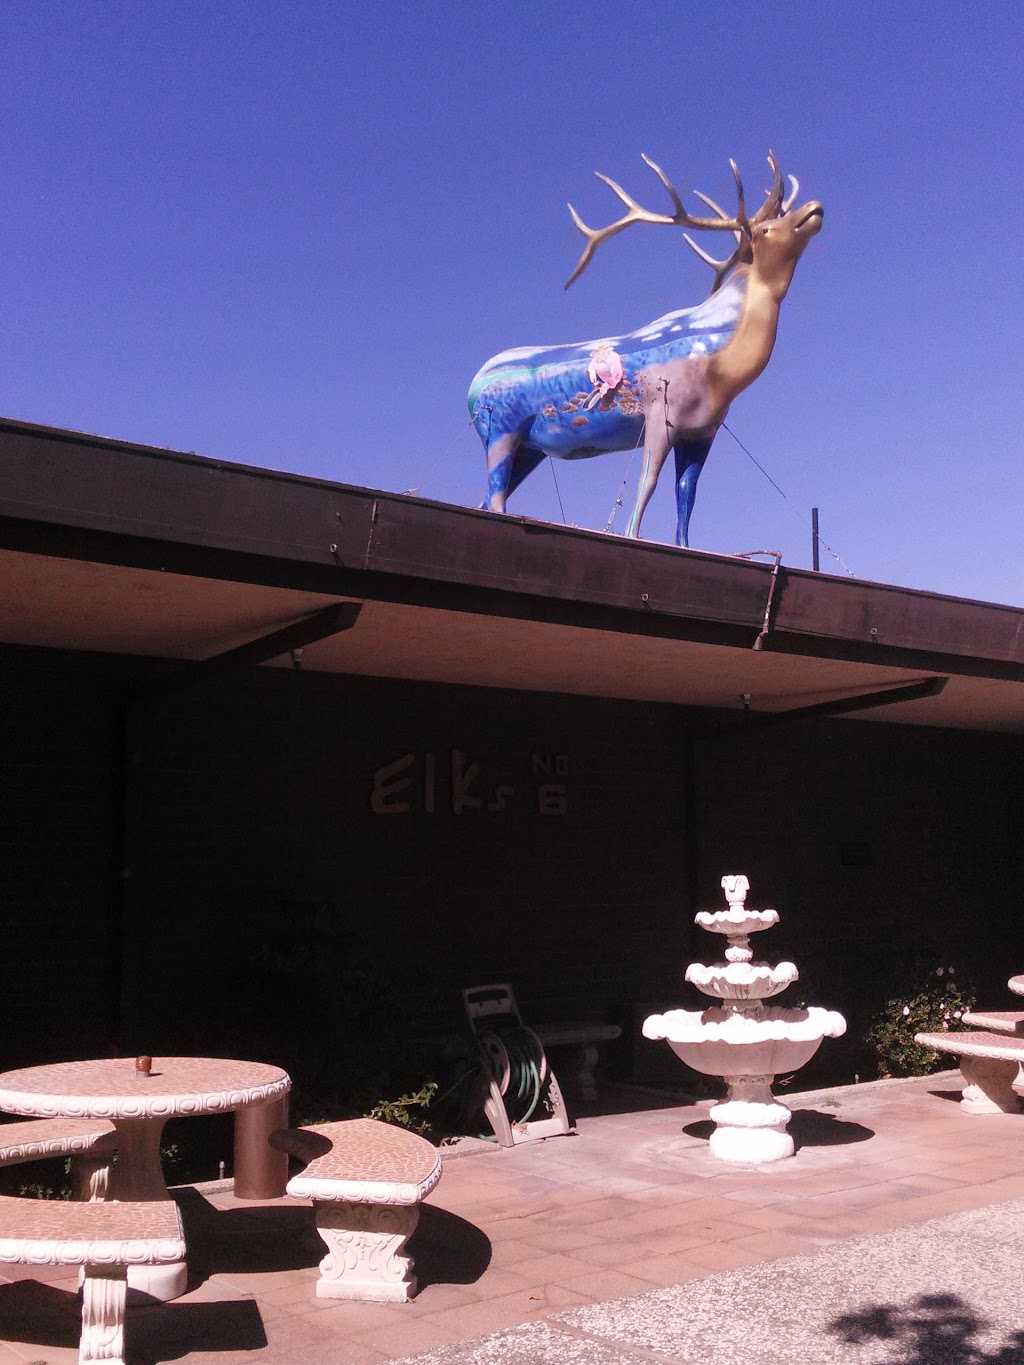 Elks Lodge | 6446 Riverside Blvd, Sacramento, CA 95831, USA | Phone: (916) 422-6666